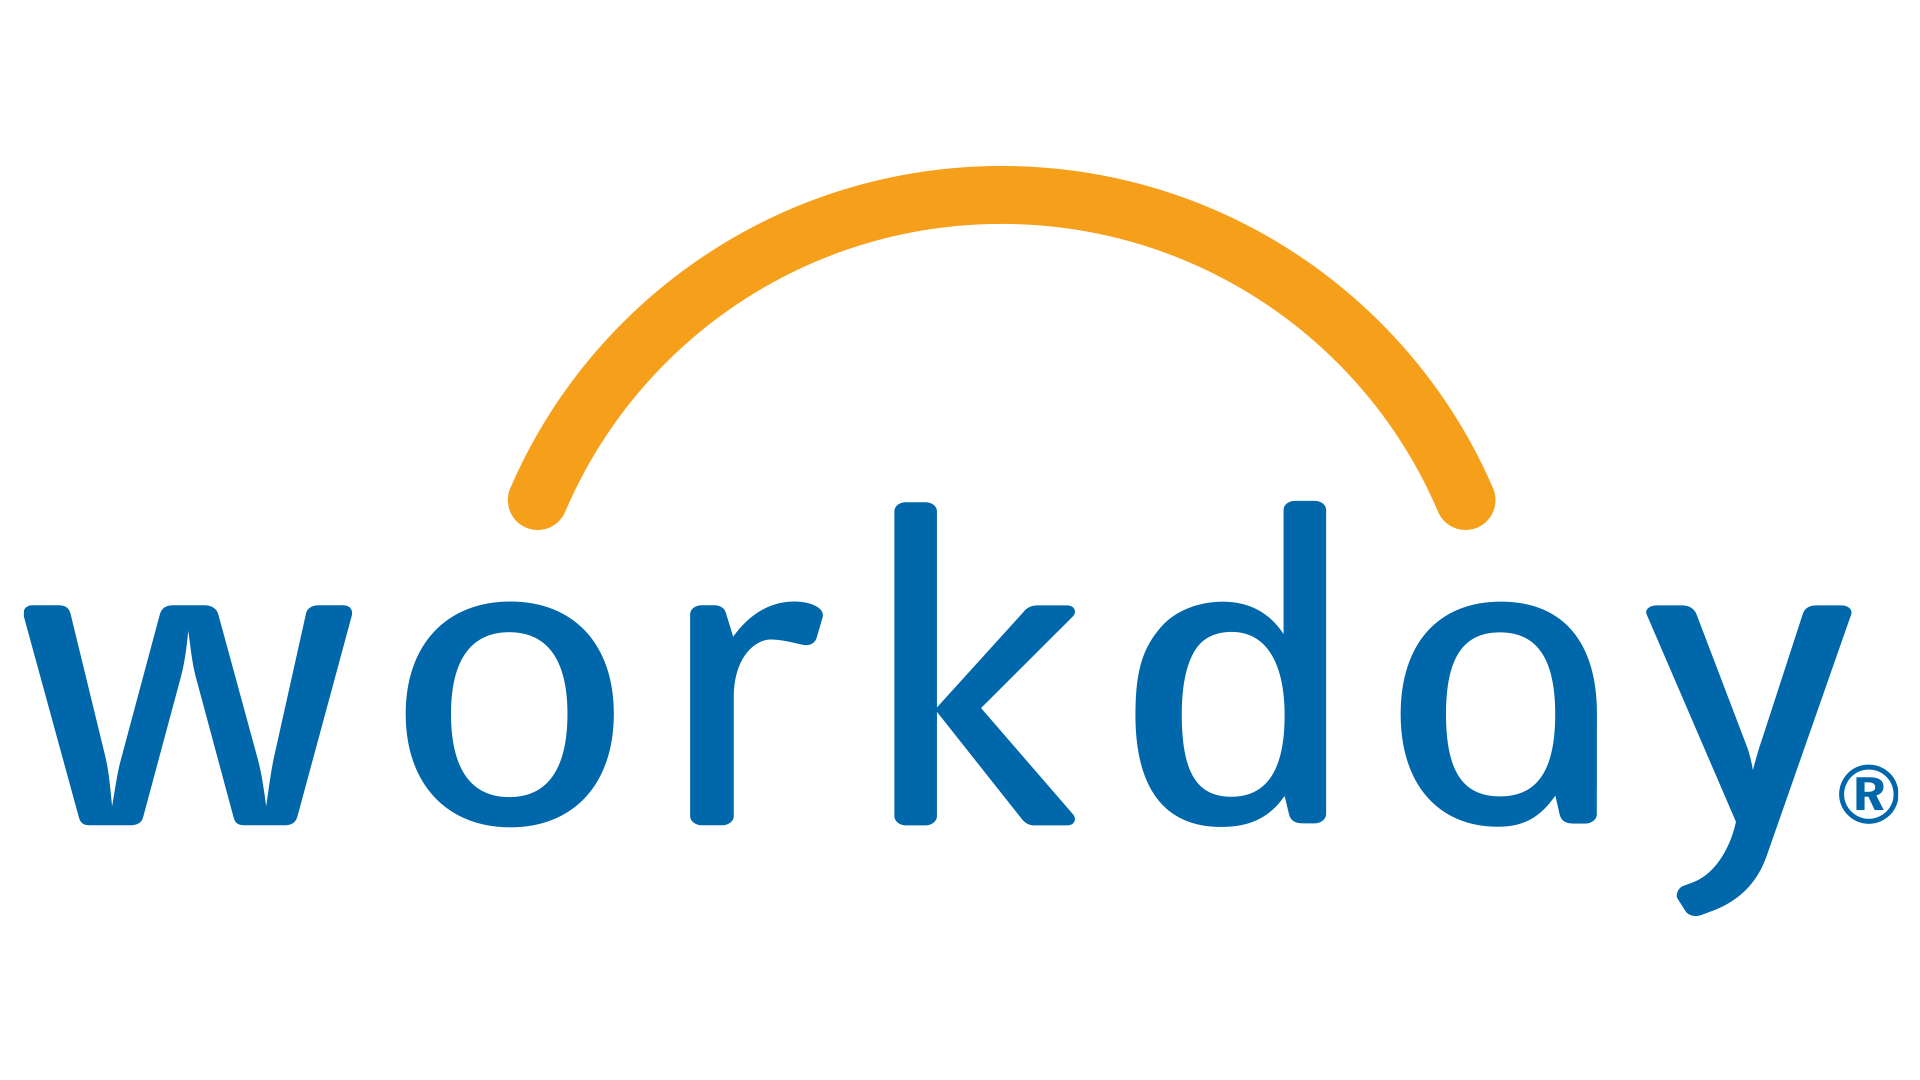 workday_logo